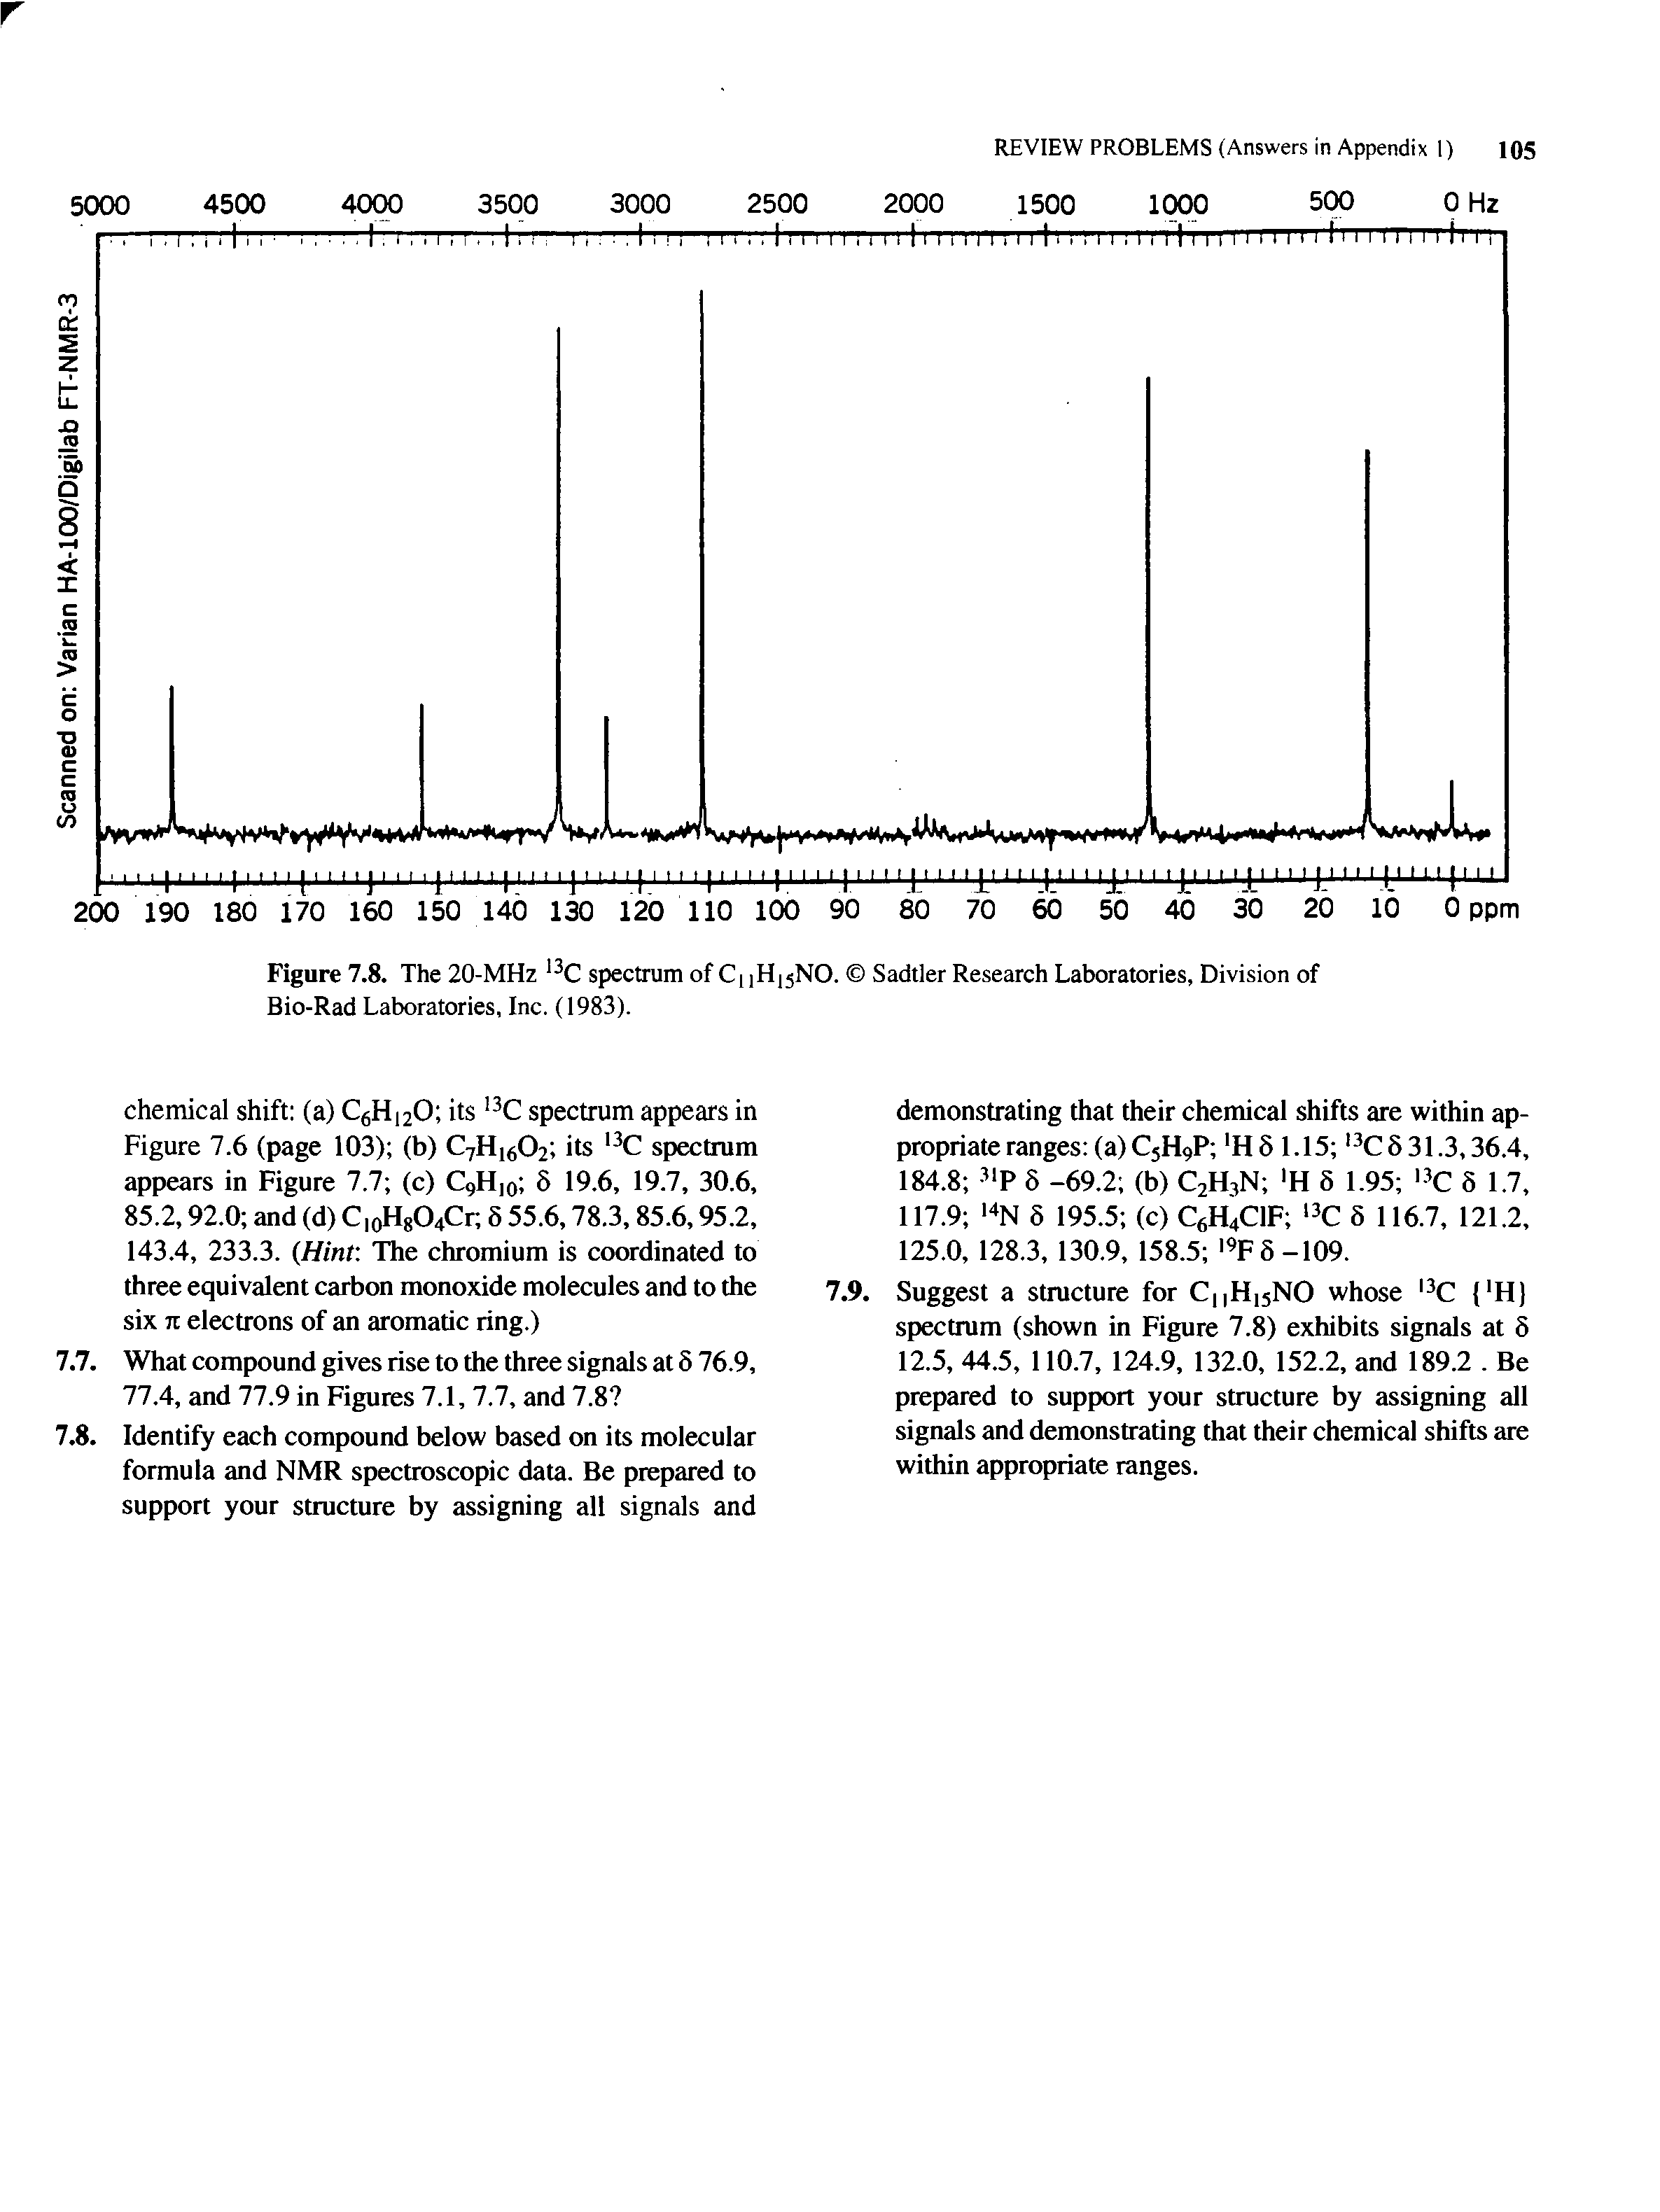 Figure 7.8. The 20-MHz 13C spectrum of CnH NO. Sadtler Research Laboratories, Division of Bio-Rad Laboratories, Inc. (1983).